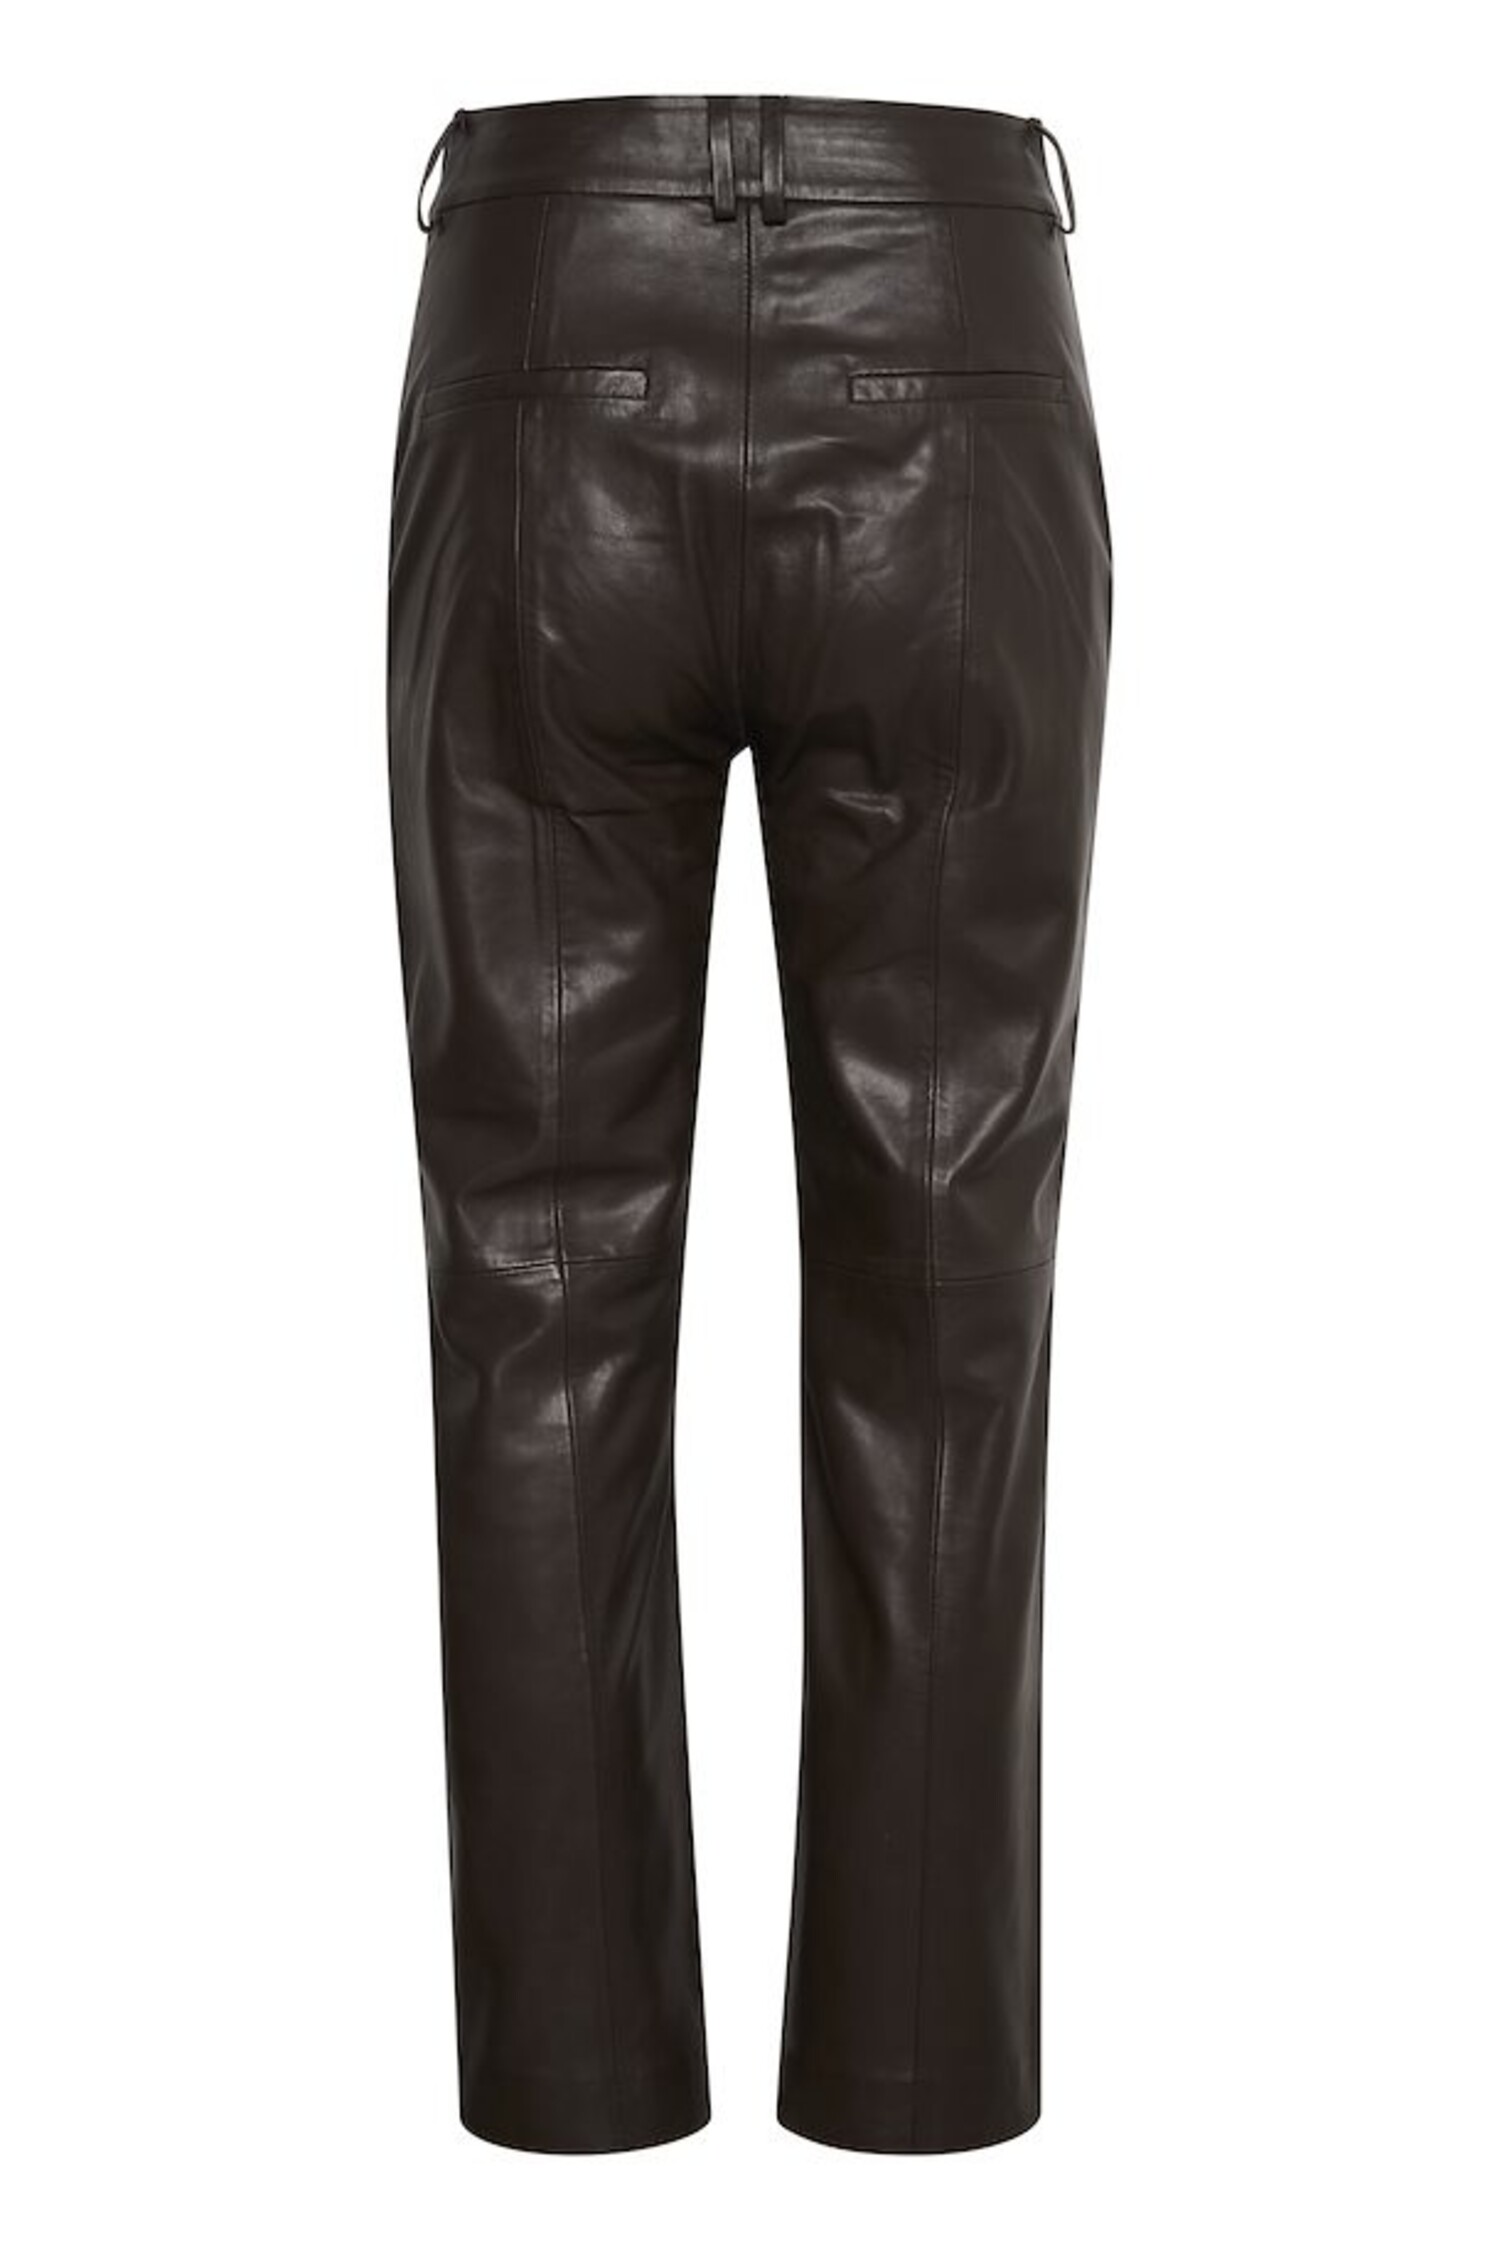 InWear Wrylie Leather Trouser Americano